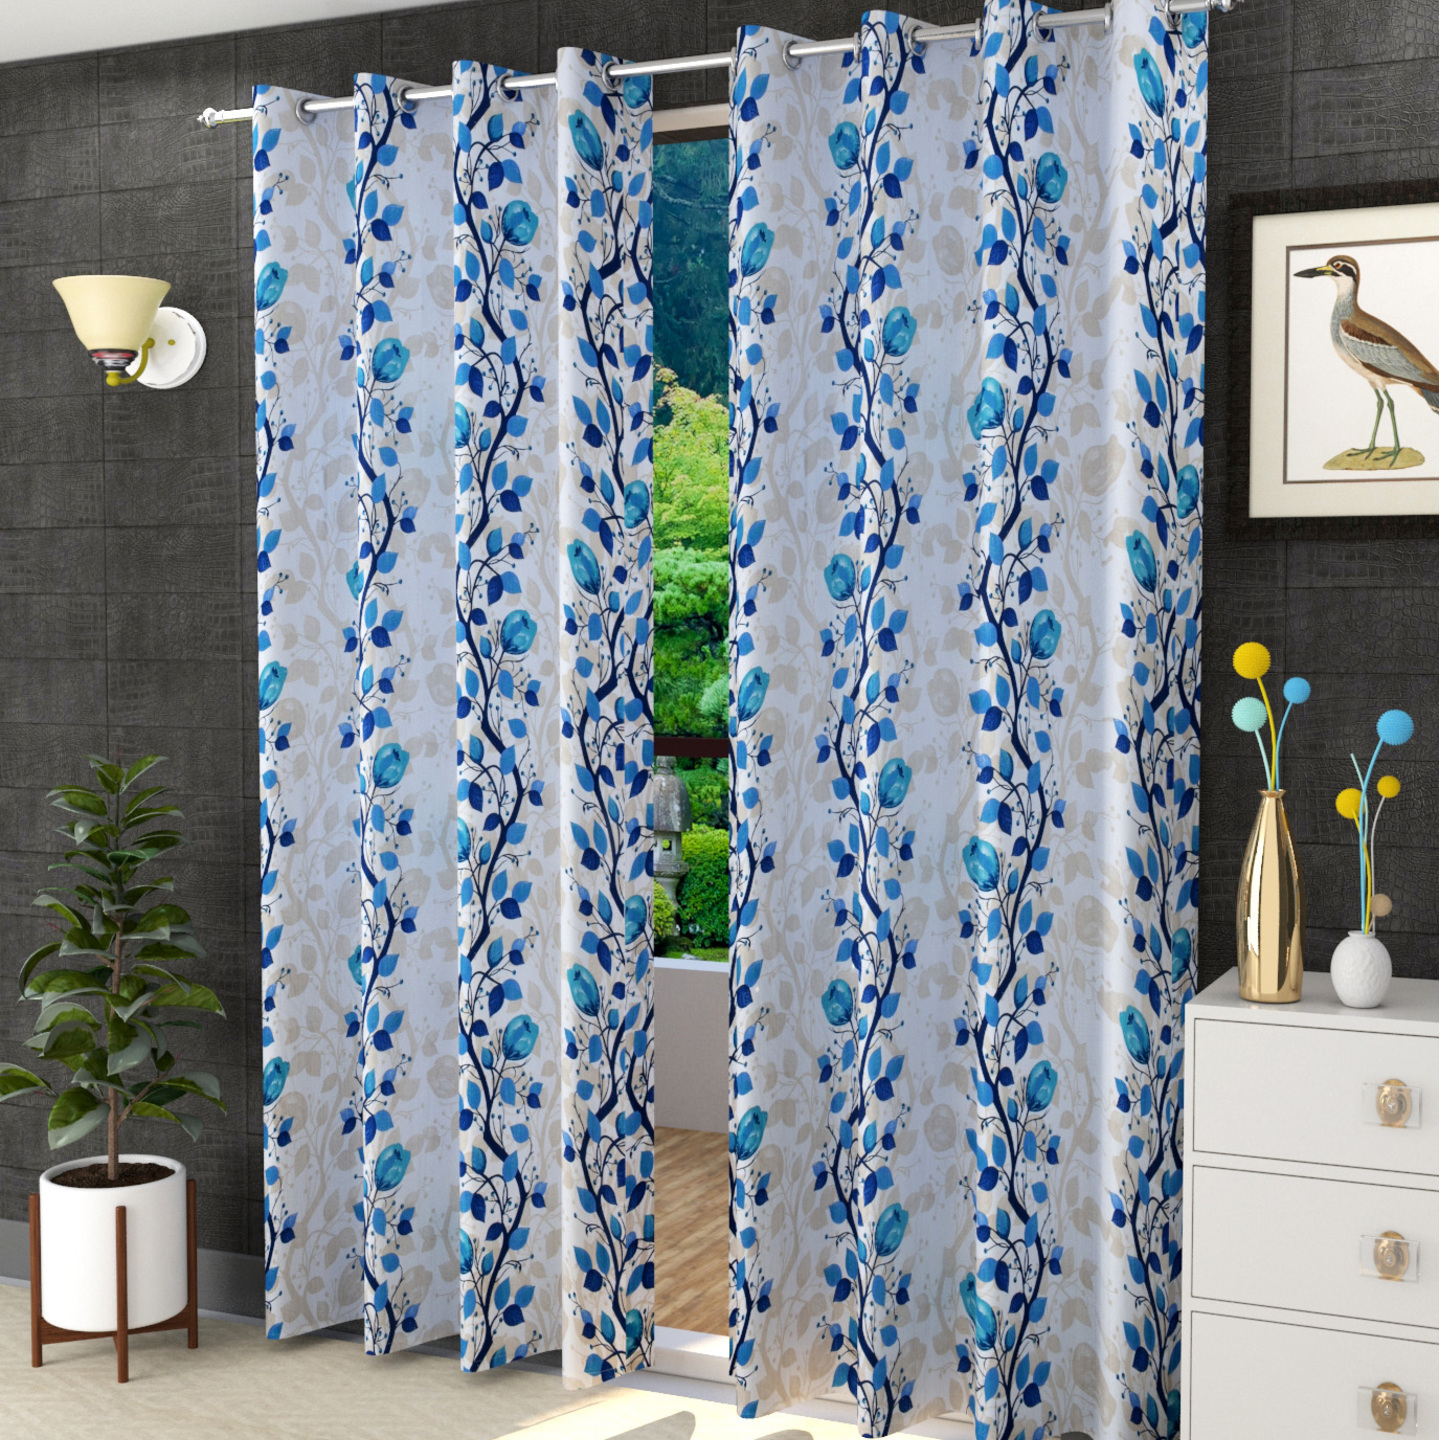  Handtex Home Long Crush Printed Curtains for Door 7 Feet Pack of 2,Aqua (Aqua, Door 7 Feet) 